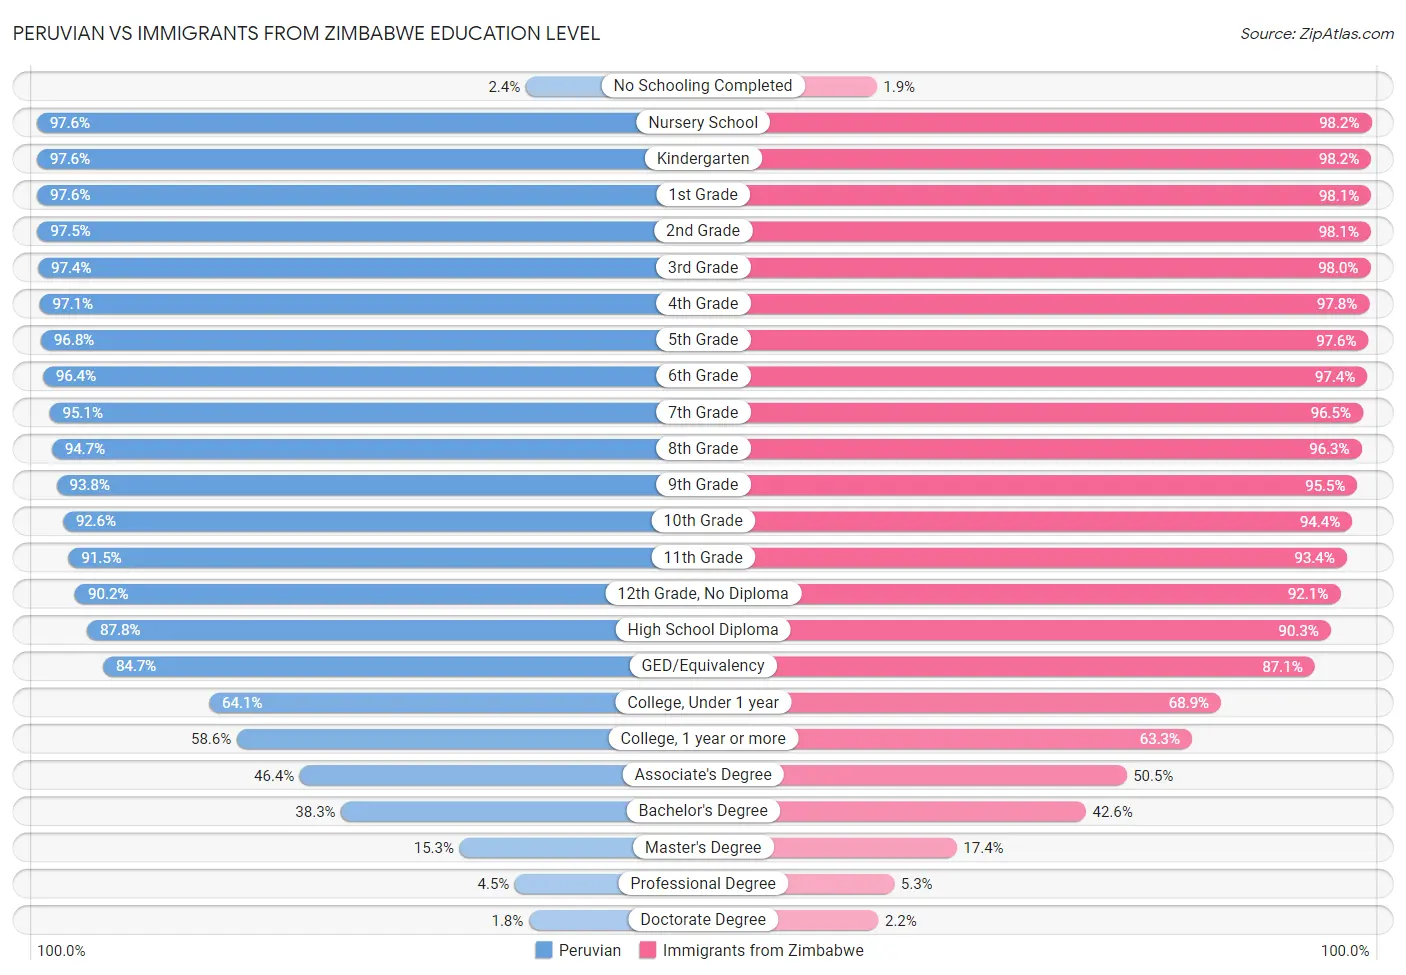 Peruvian vs Immigrants from Zimbabwe Education Level